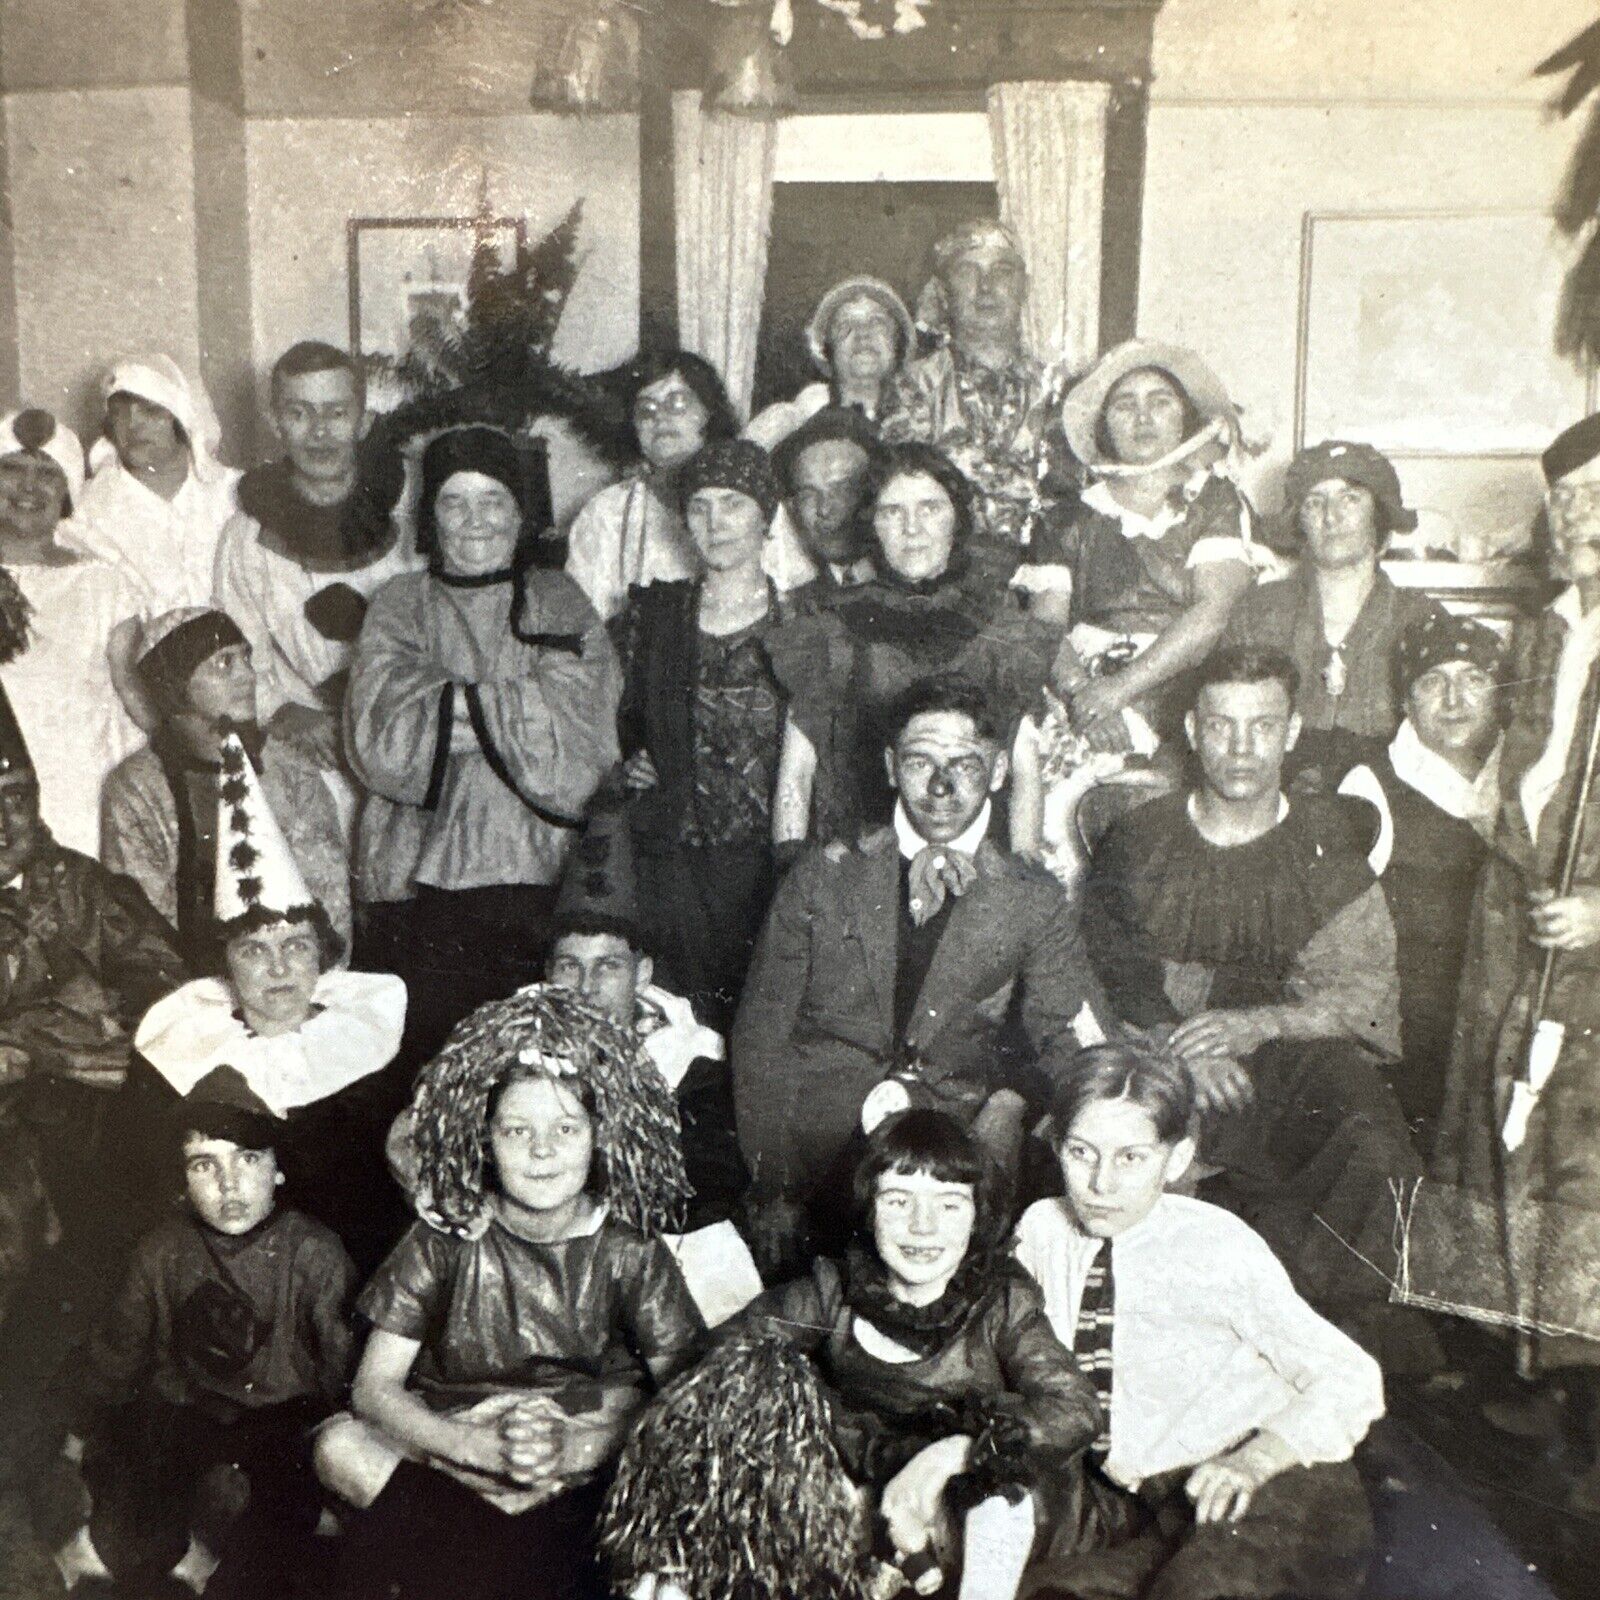 VINTAGE PHOTO 1930s or 1940s costume party Halloween creepy Original Snapshot